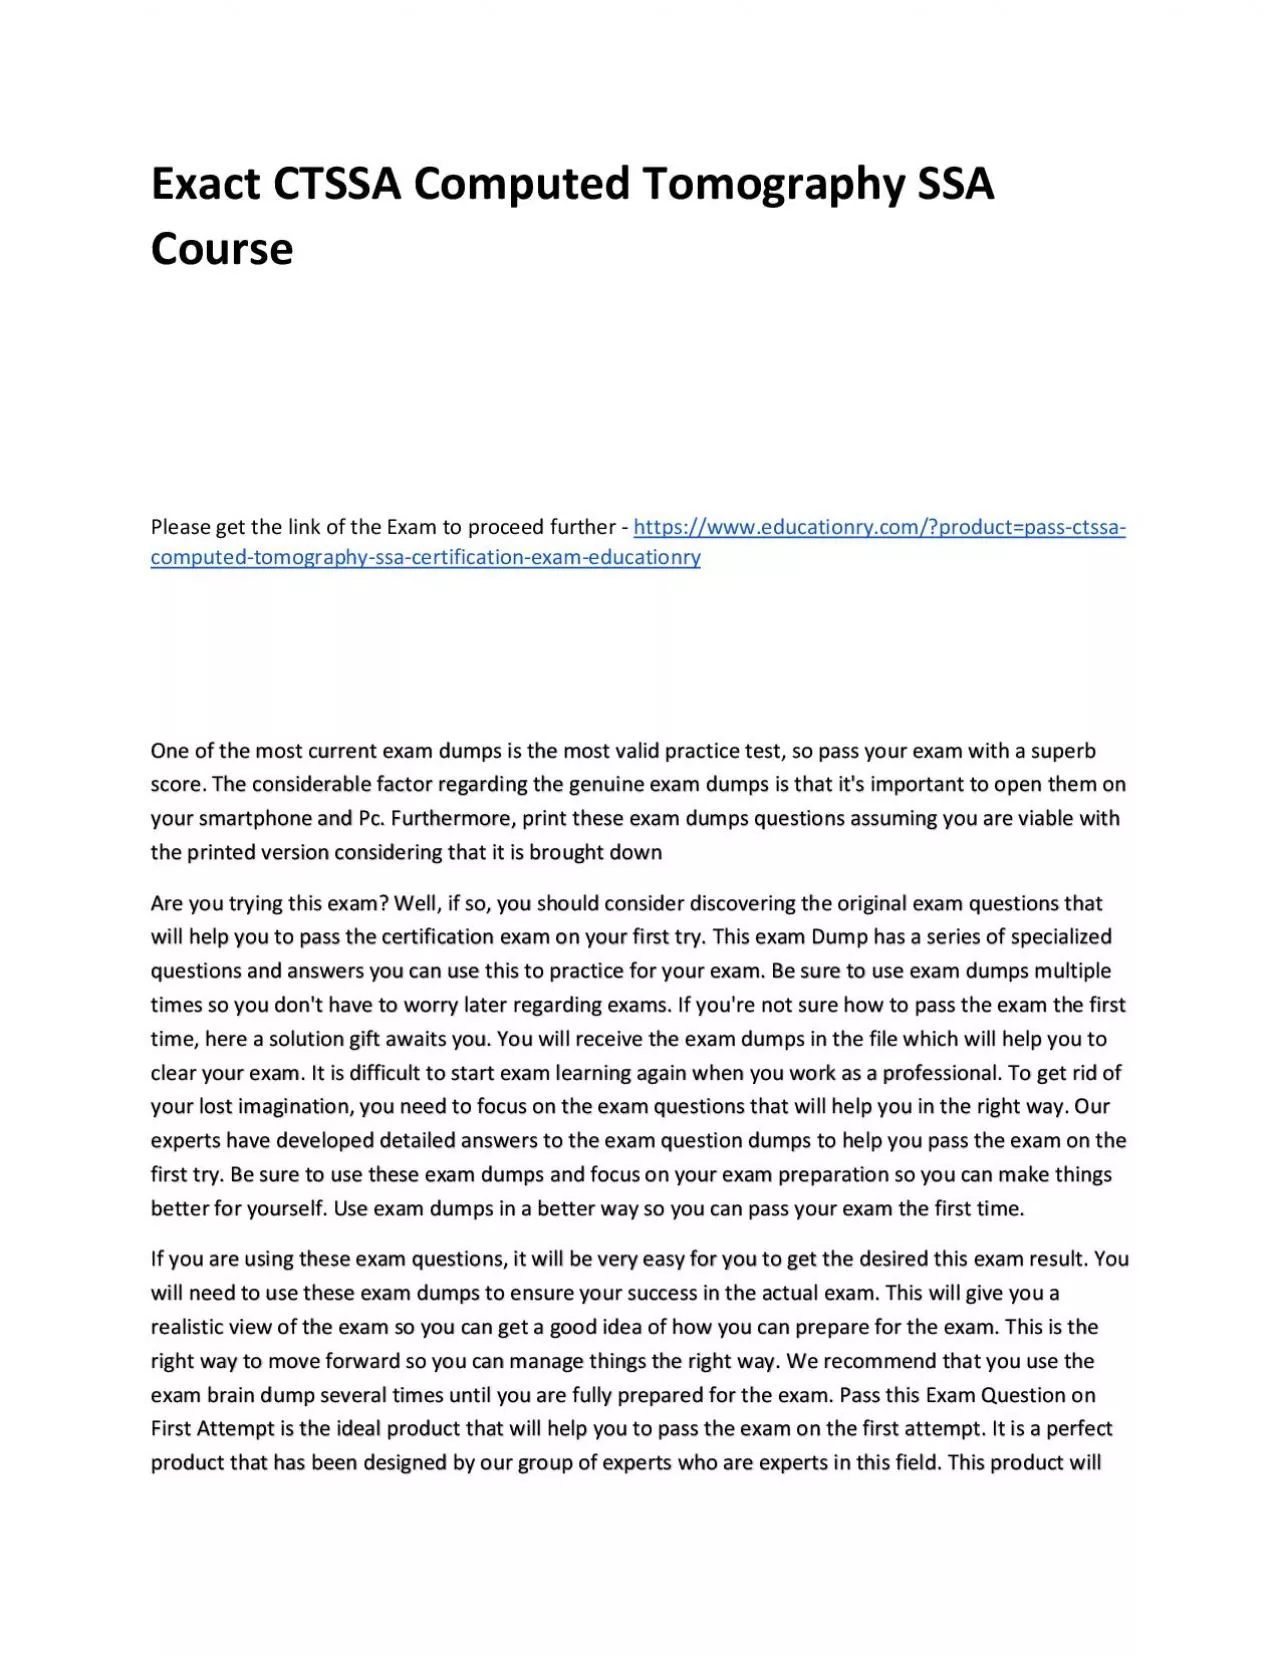 Exact CTSSA Computed Tomography SSA Practice Course